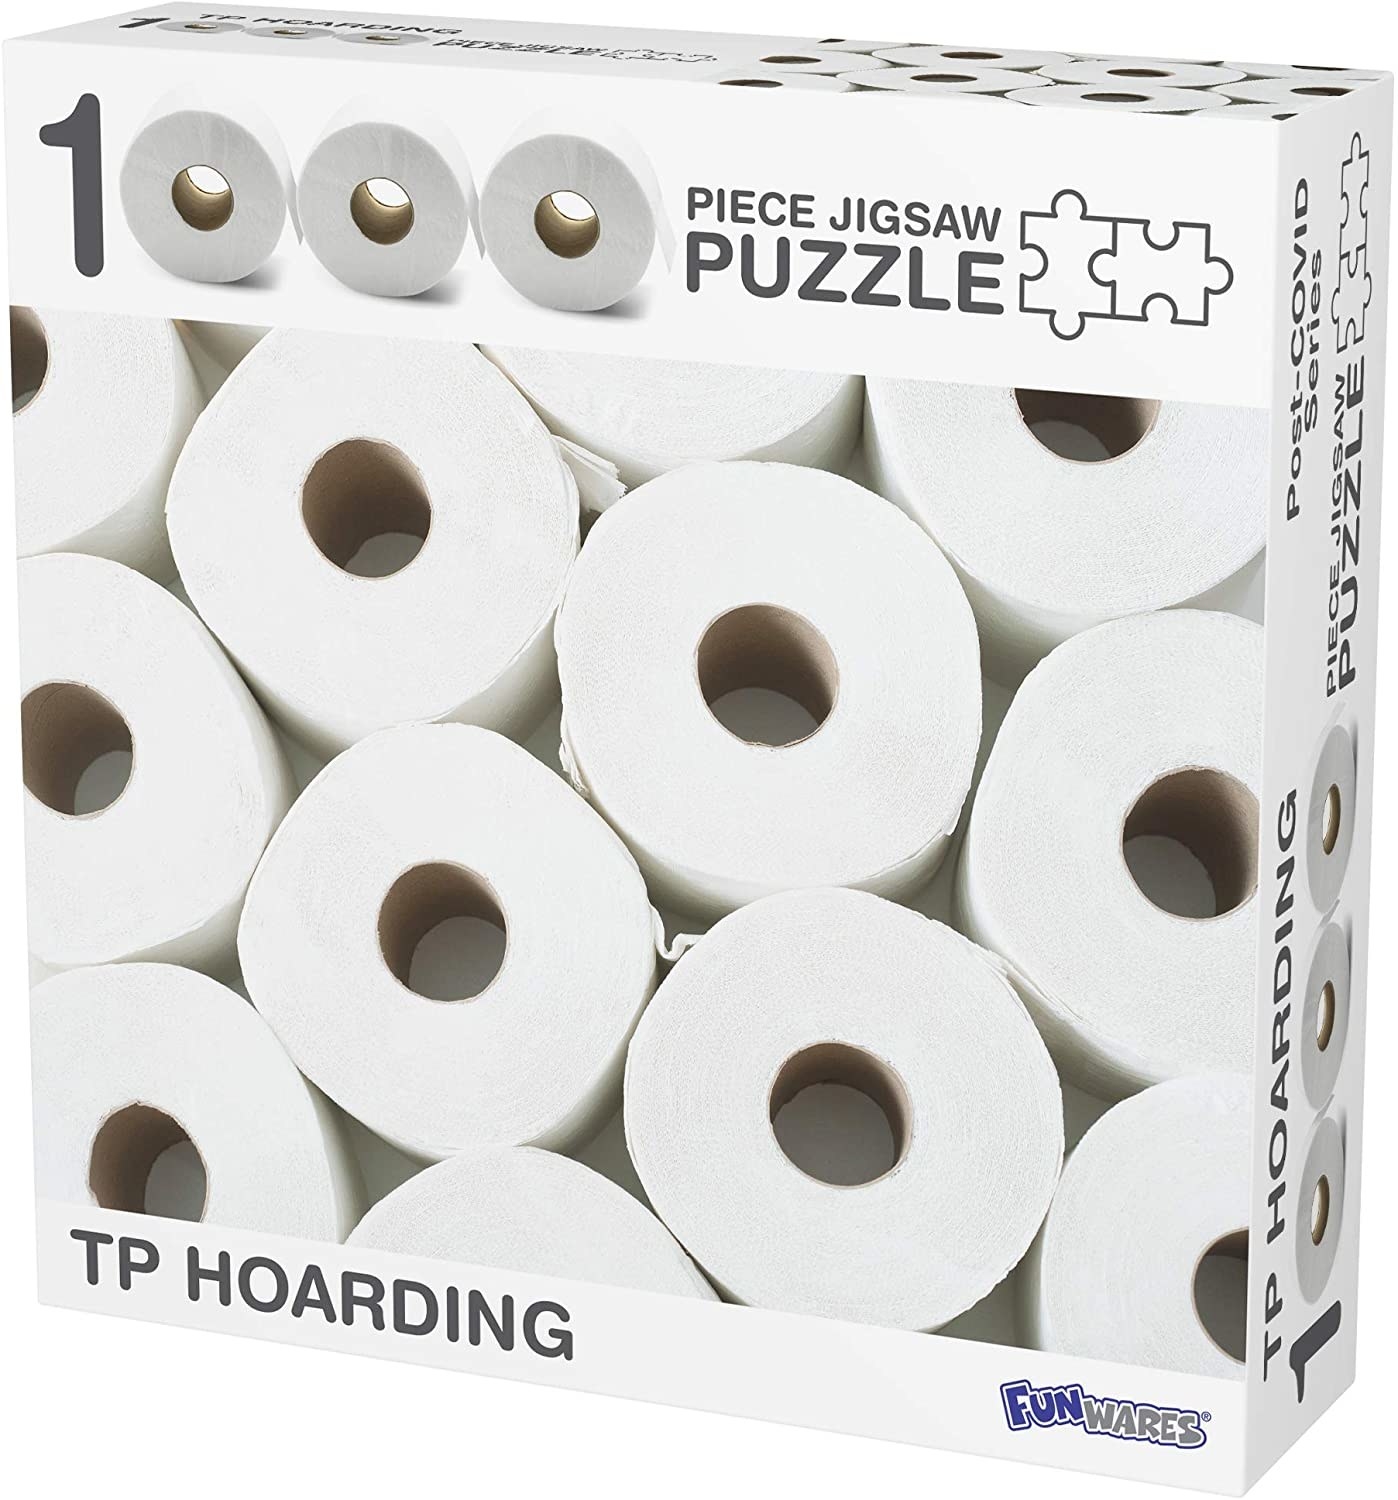 puzzle of toilet paper rolls